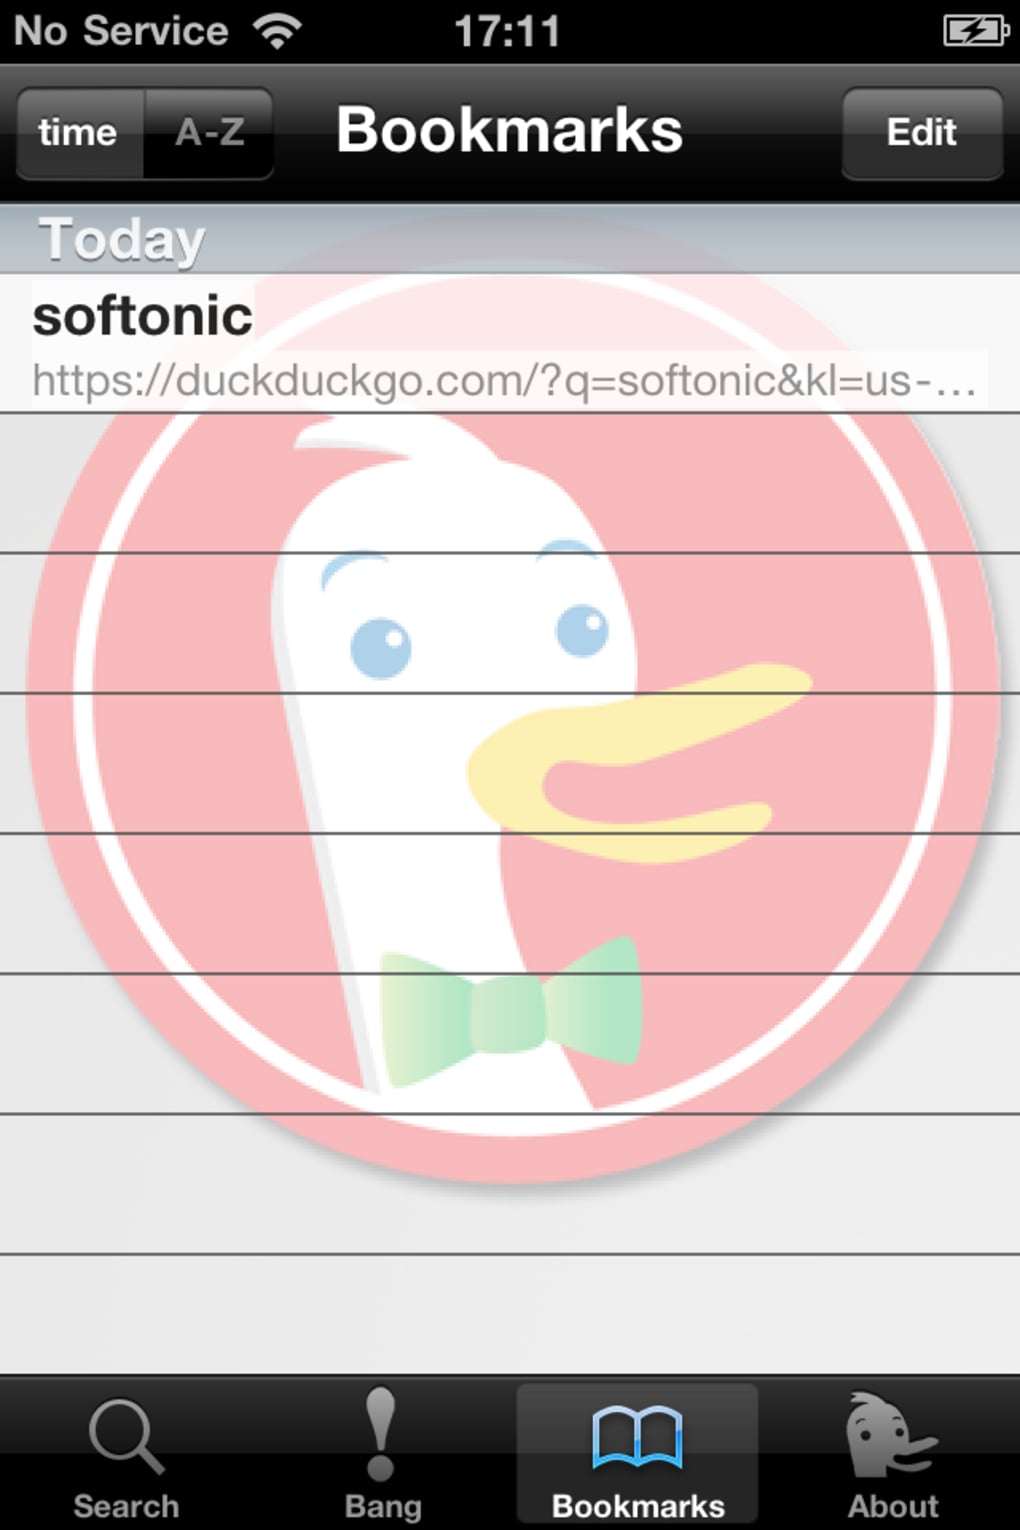 duckduckgo browser download for windows 10 64 bit